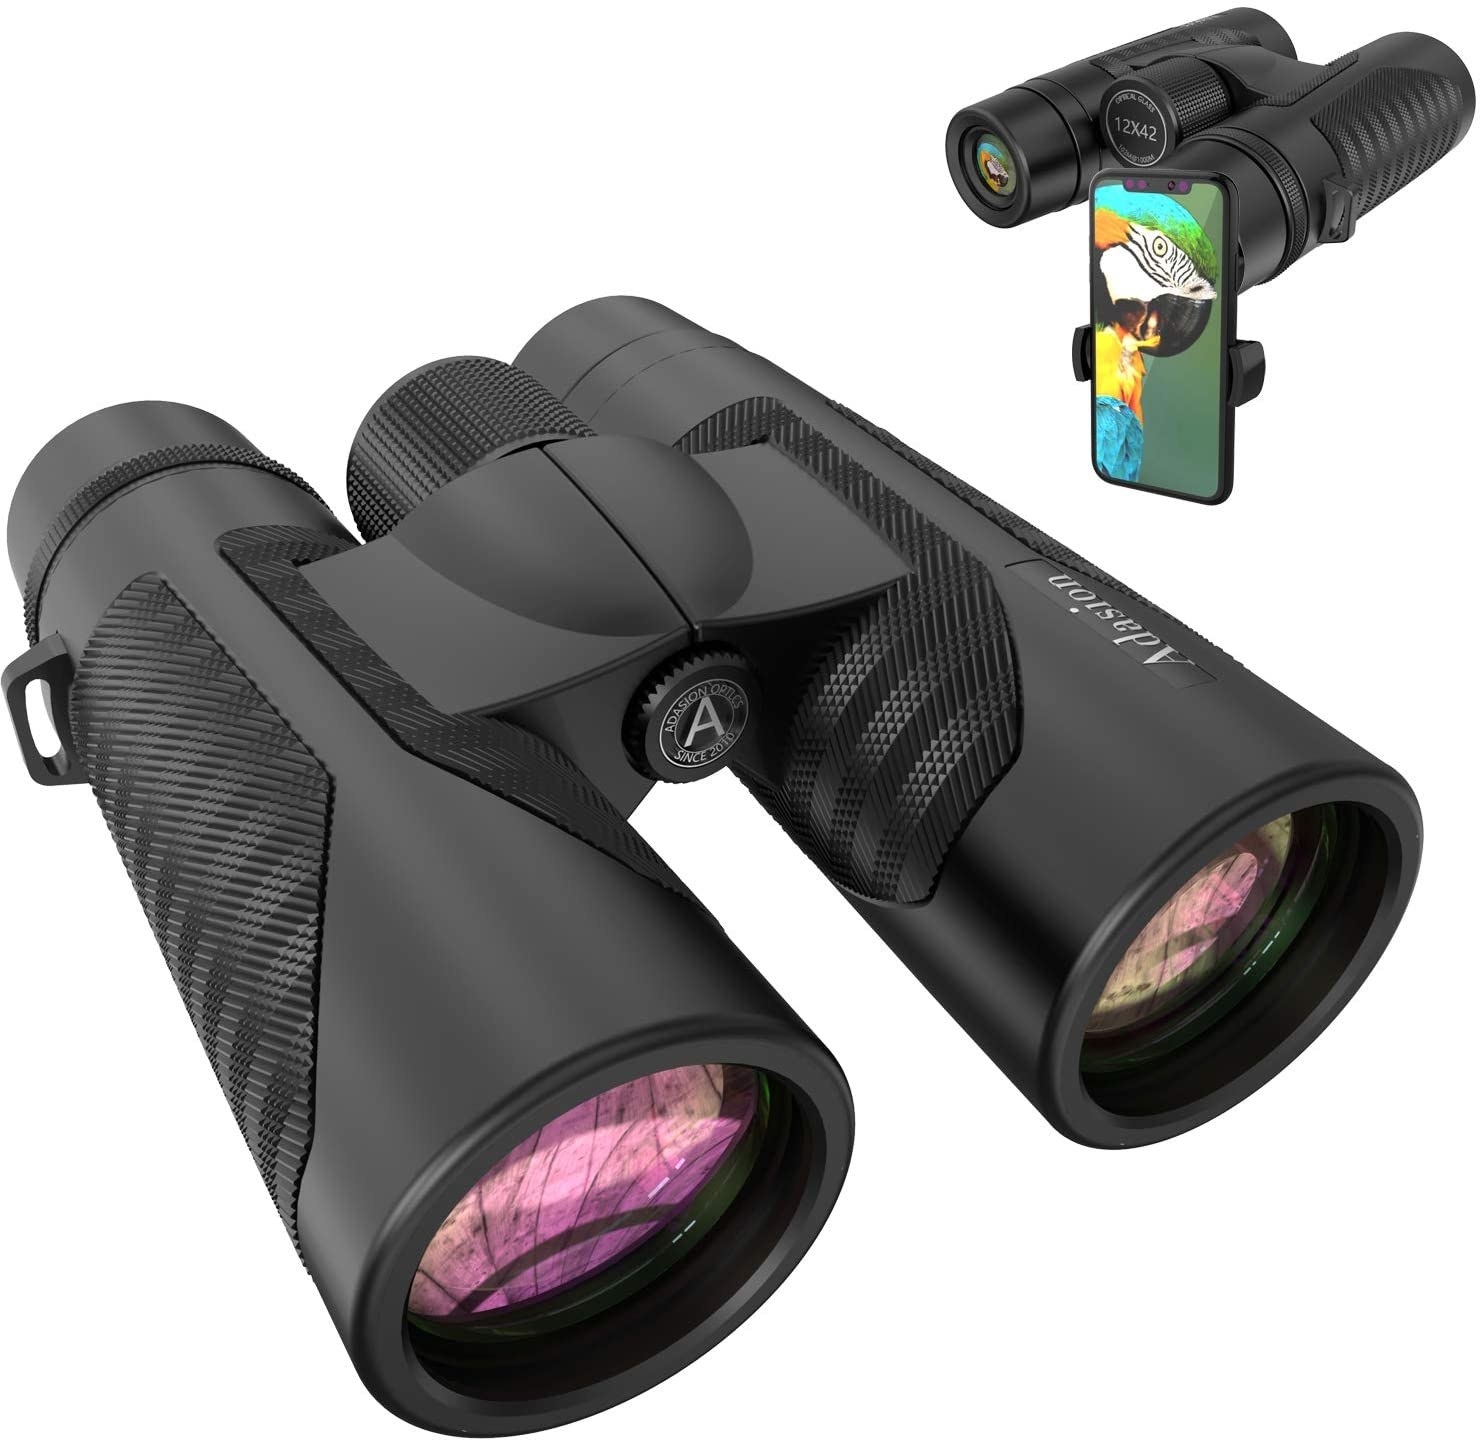 the black binoculars and black phone adapter